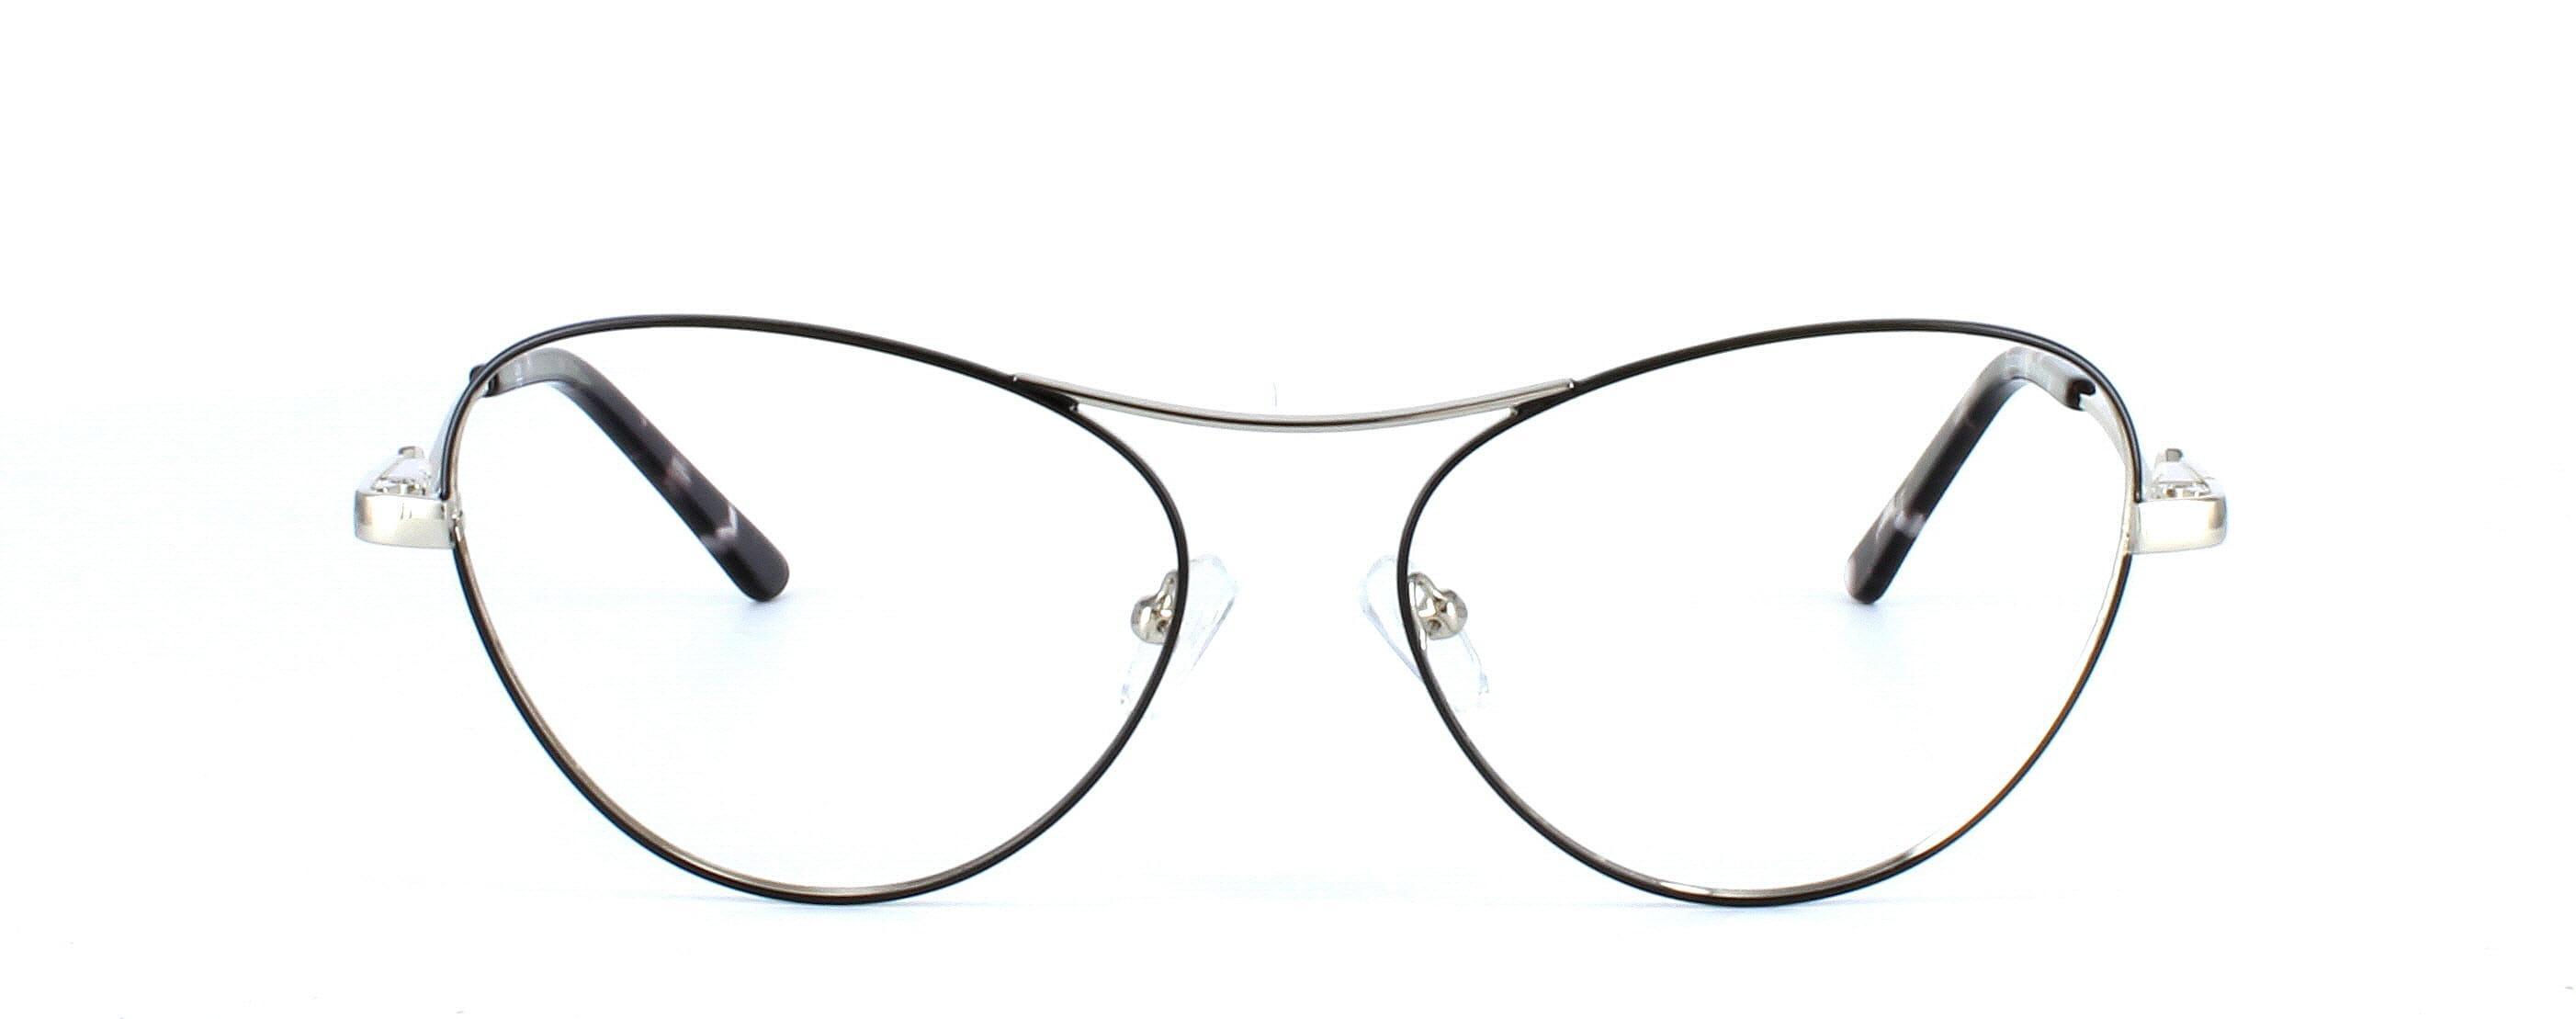 Auriga - Ladies 2-tone black & silver metal glasses - image view 5